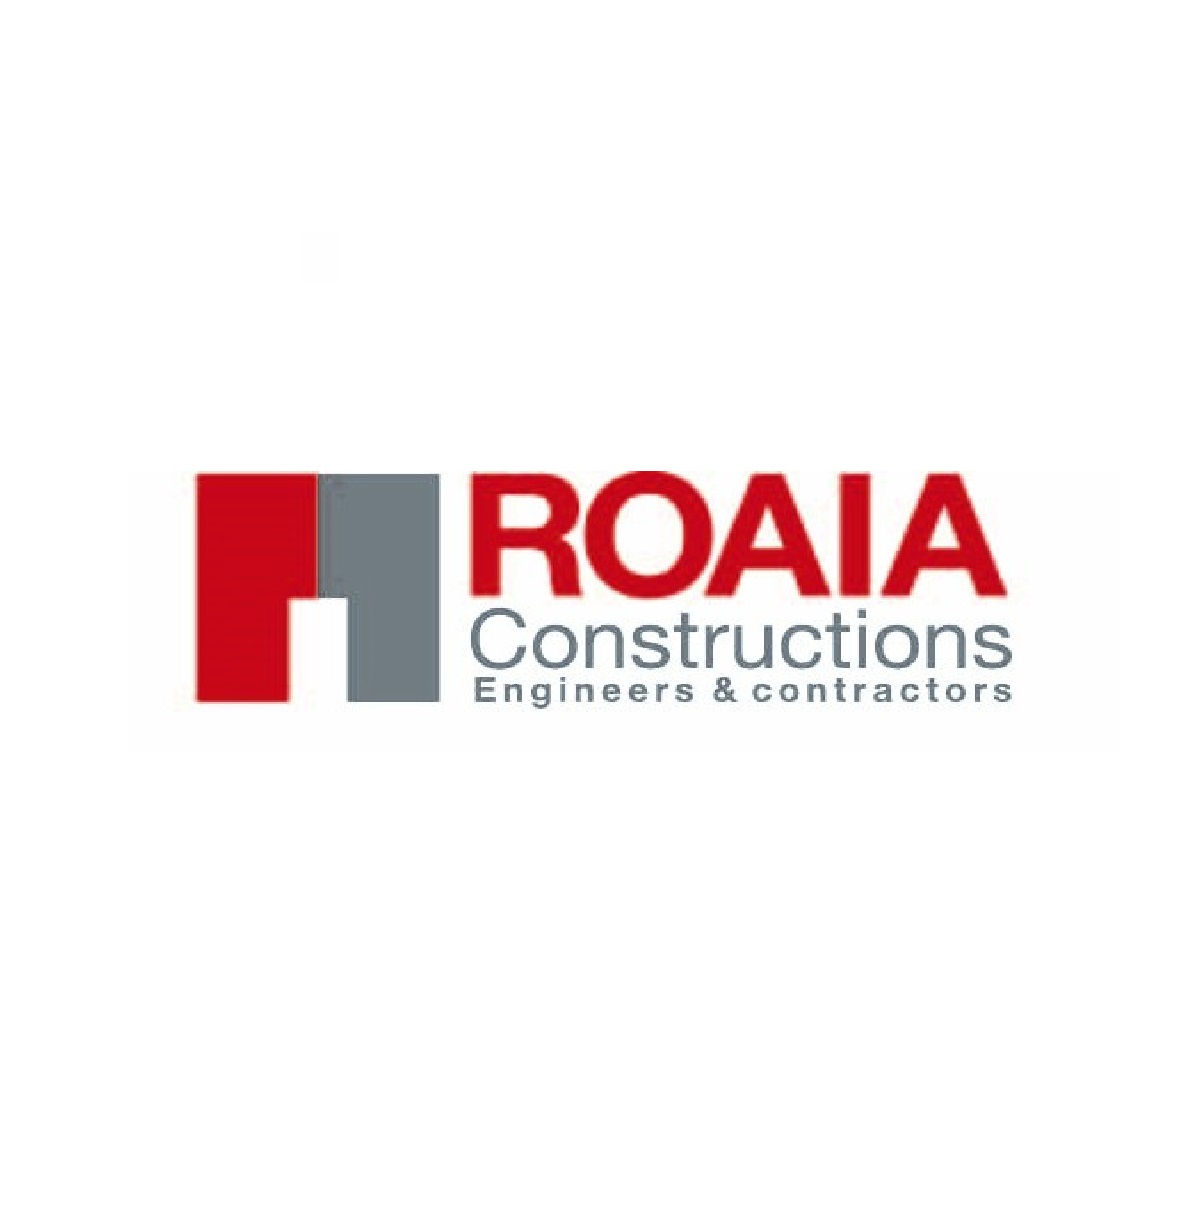 Roaia constructions